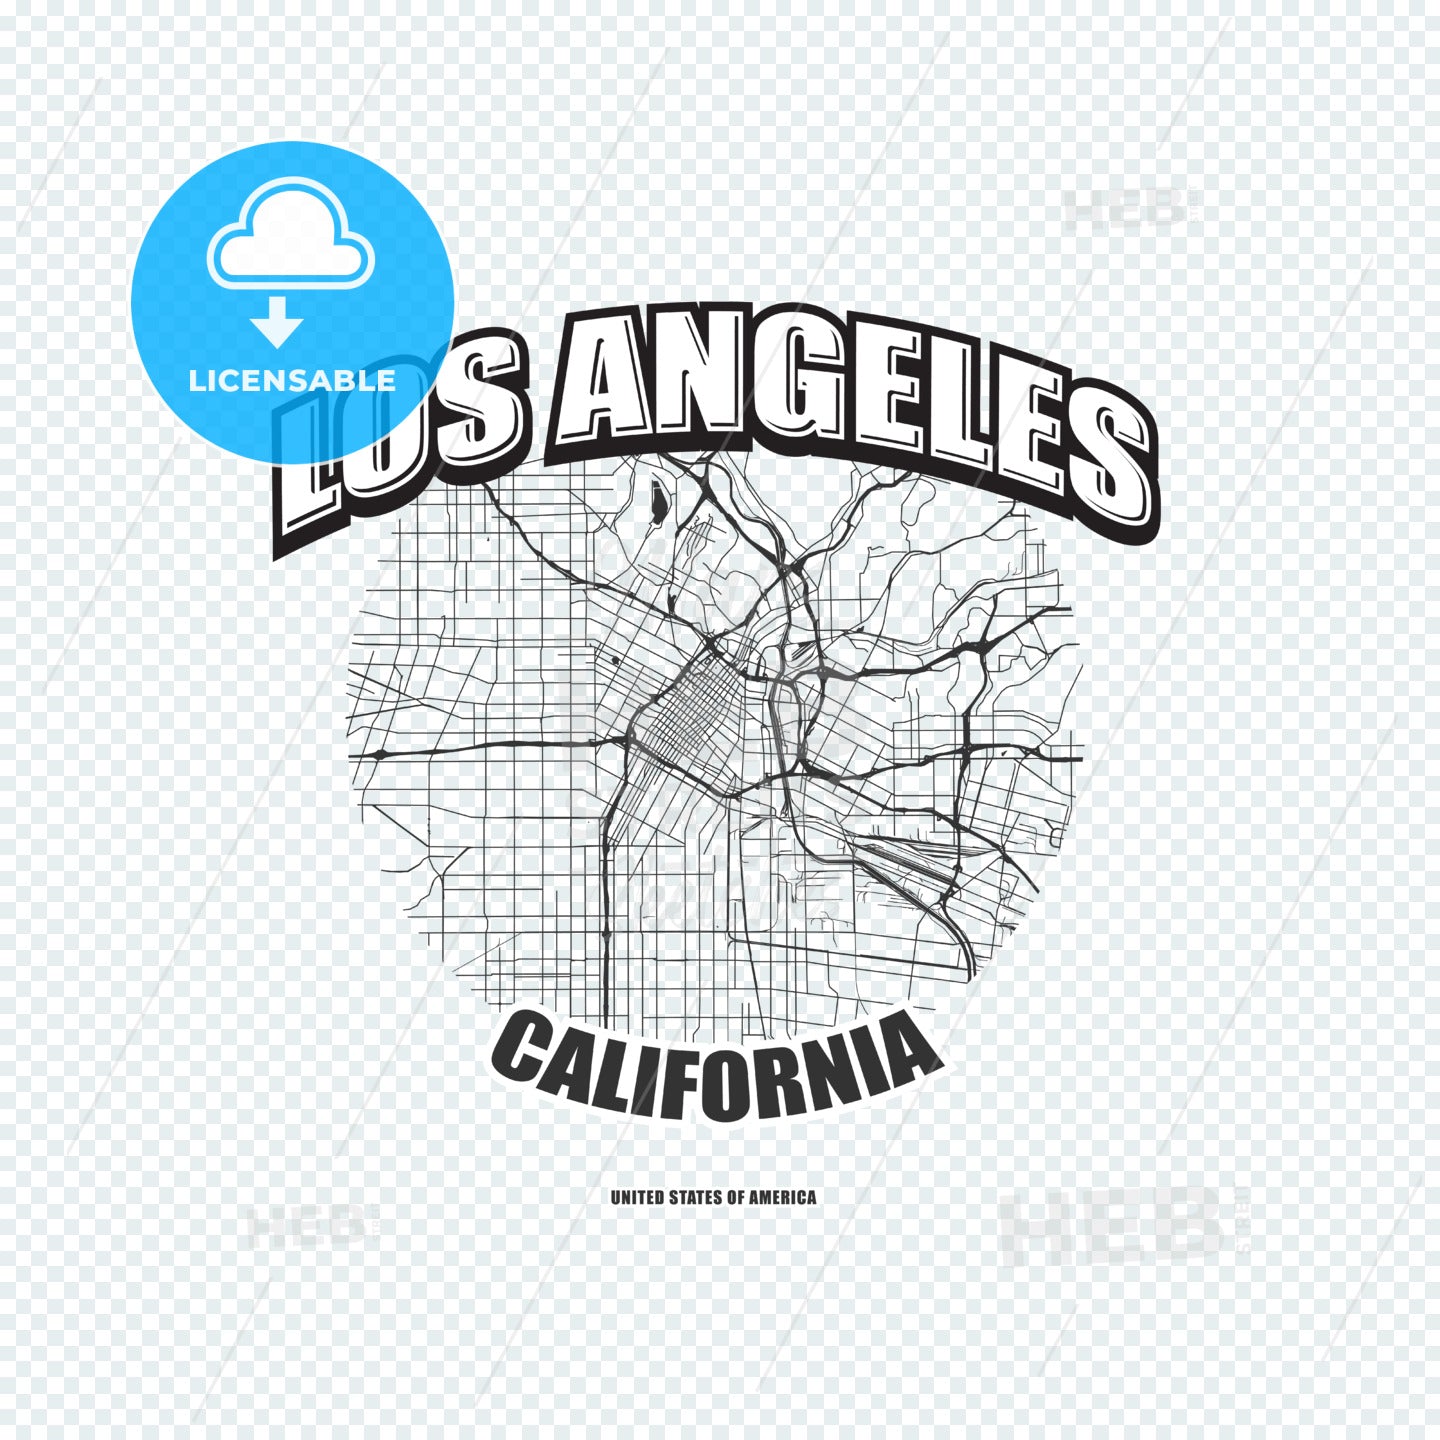 Los Angeles, California, logo artwork – instant download